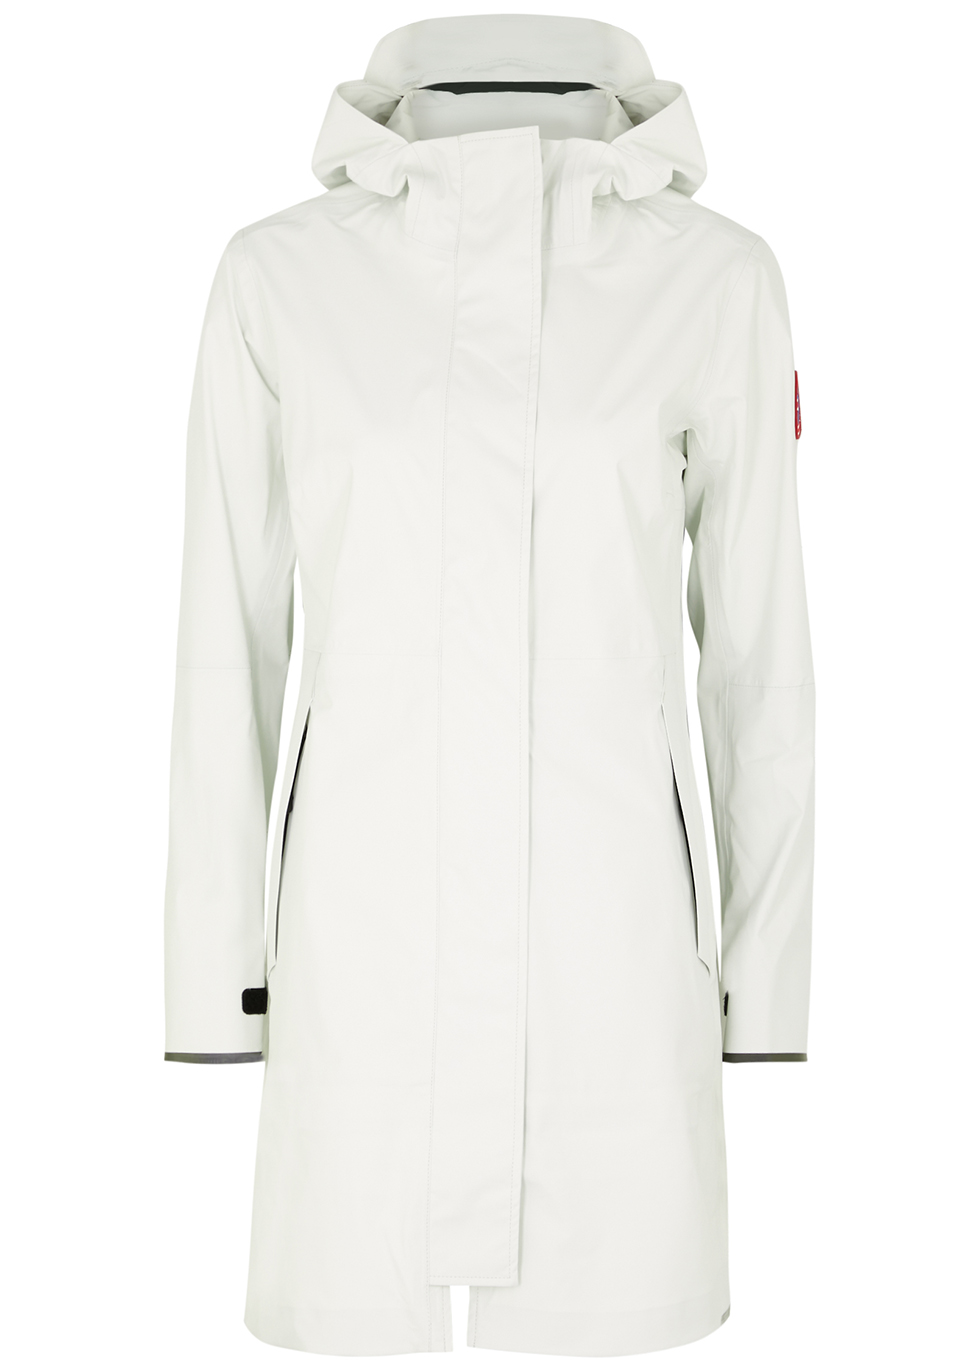 Salida white Tri-Durance® shell jacket Harvey Nichols Women Clothing Jackets Outdoor Jackets 